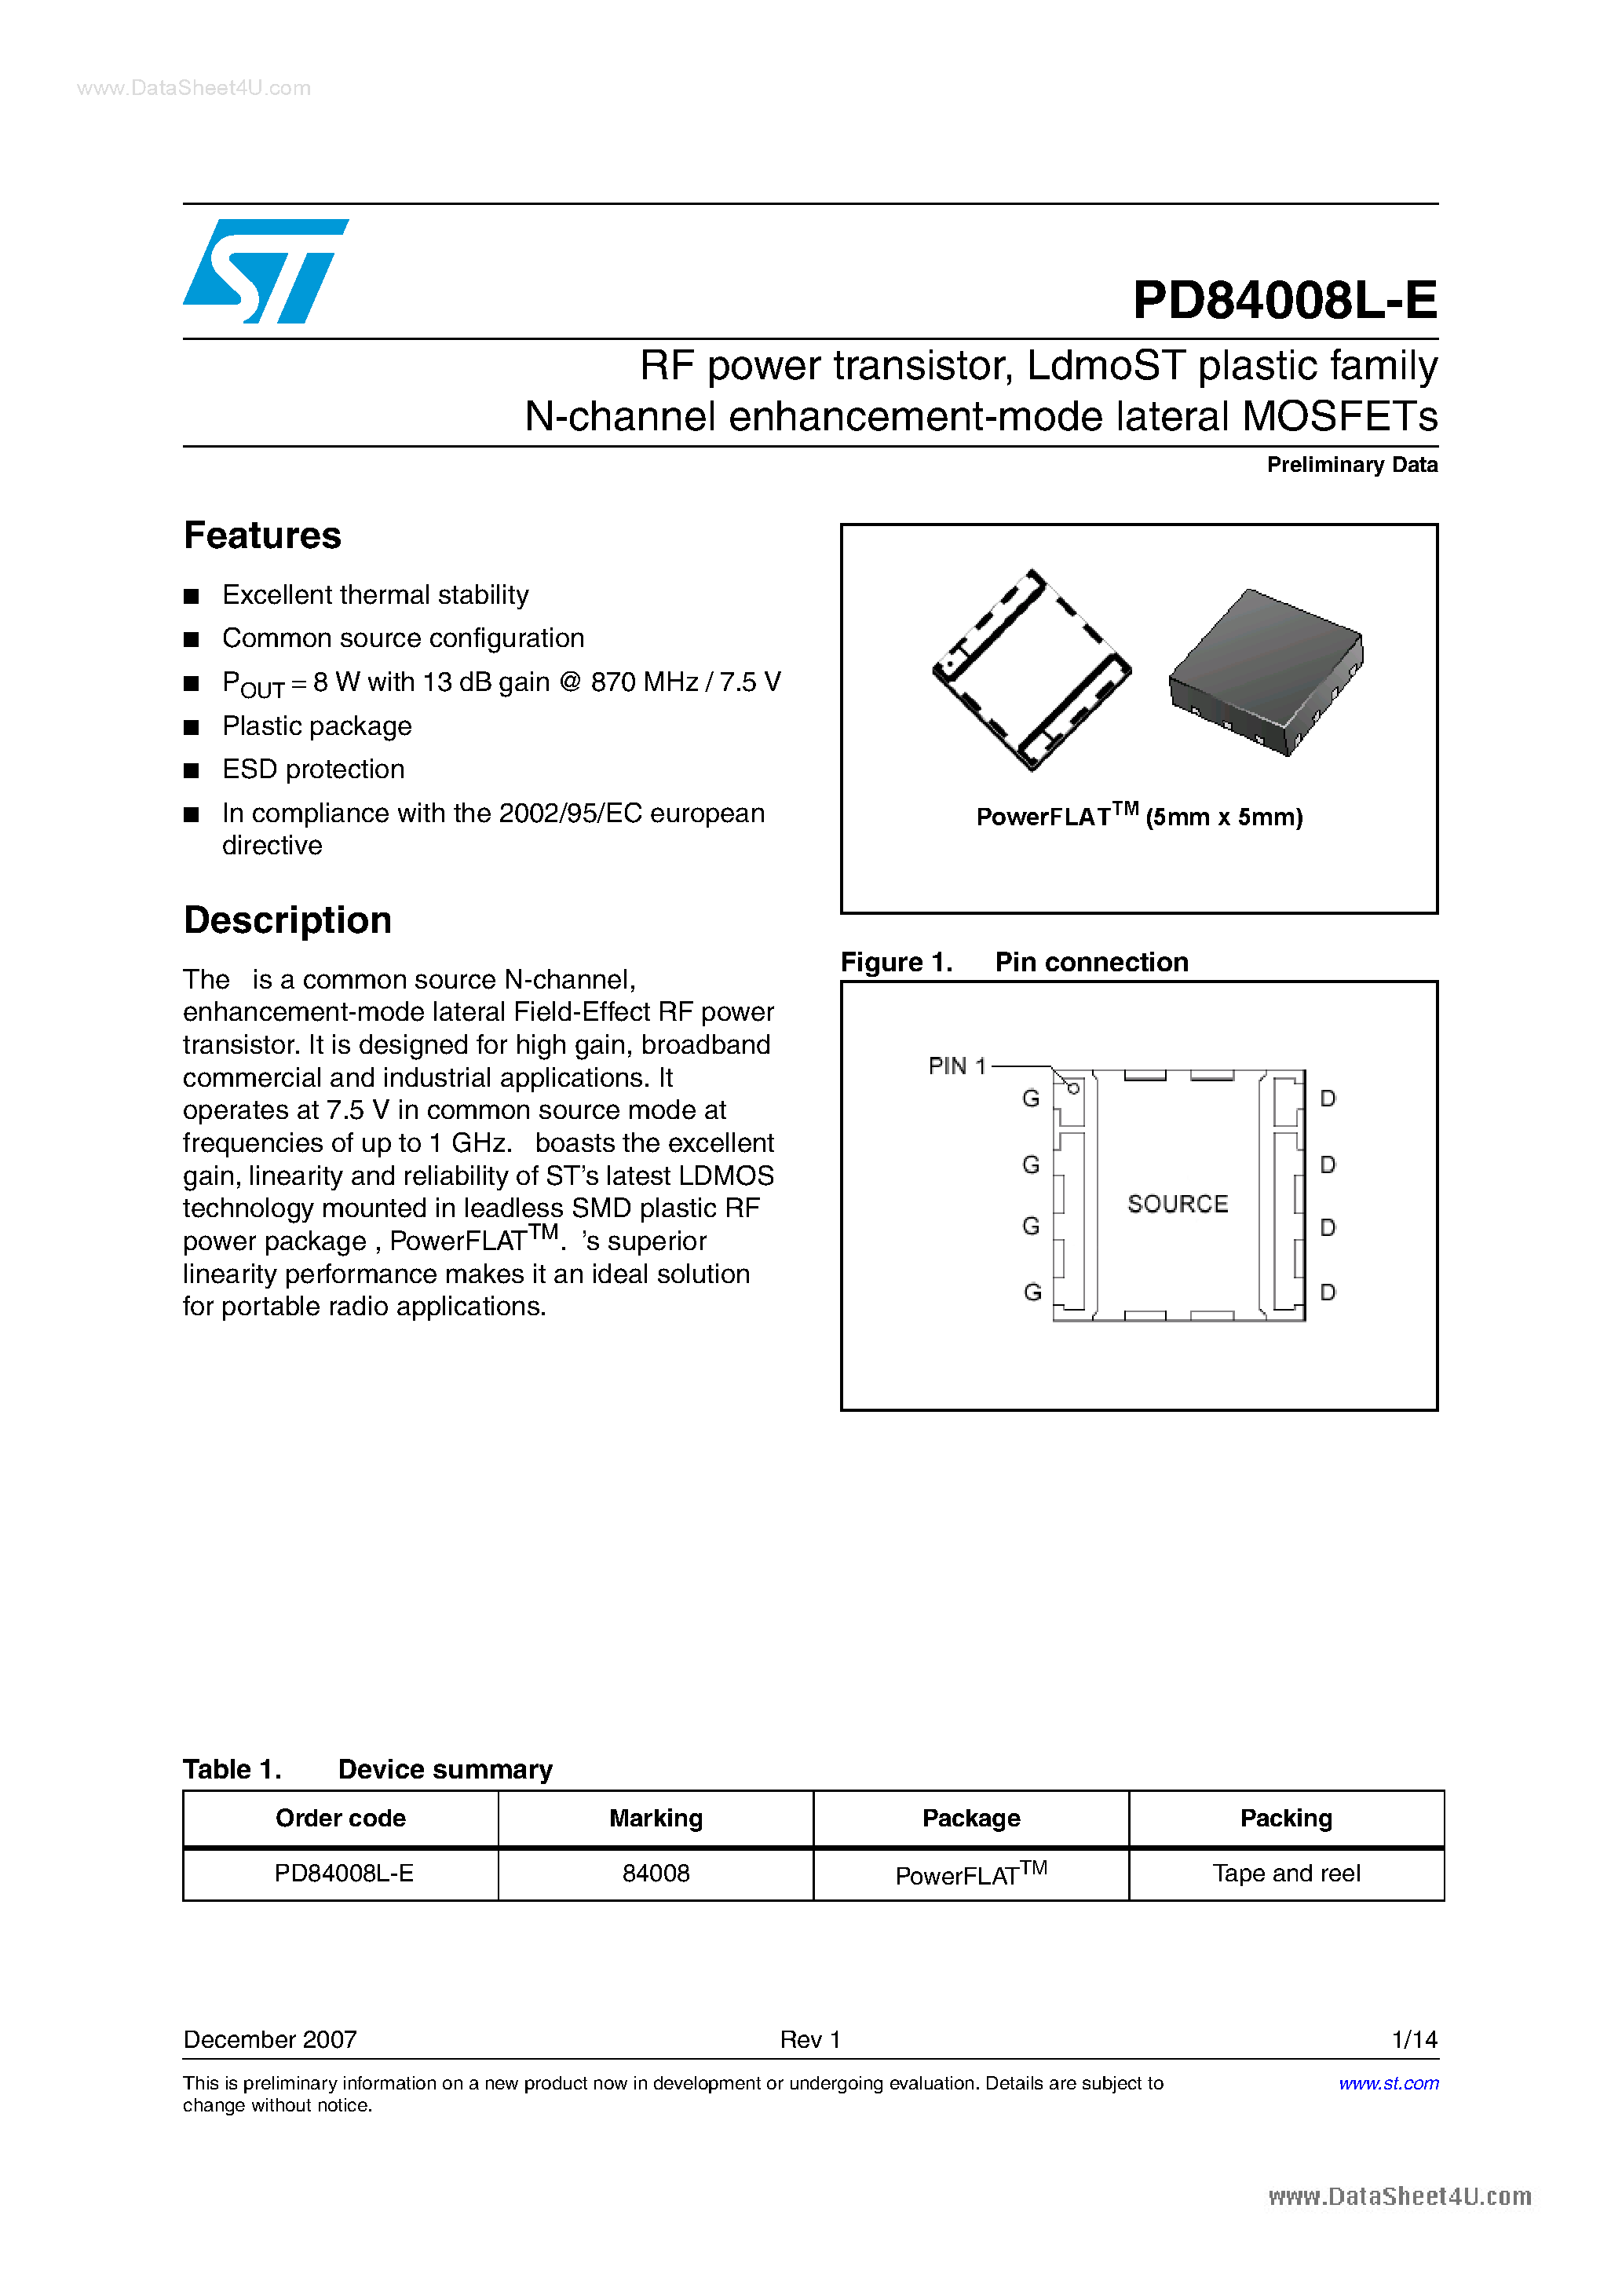 Datasheet PD84008L-E - Transistors page 1